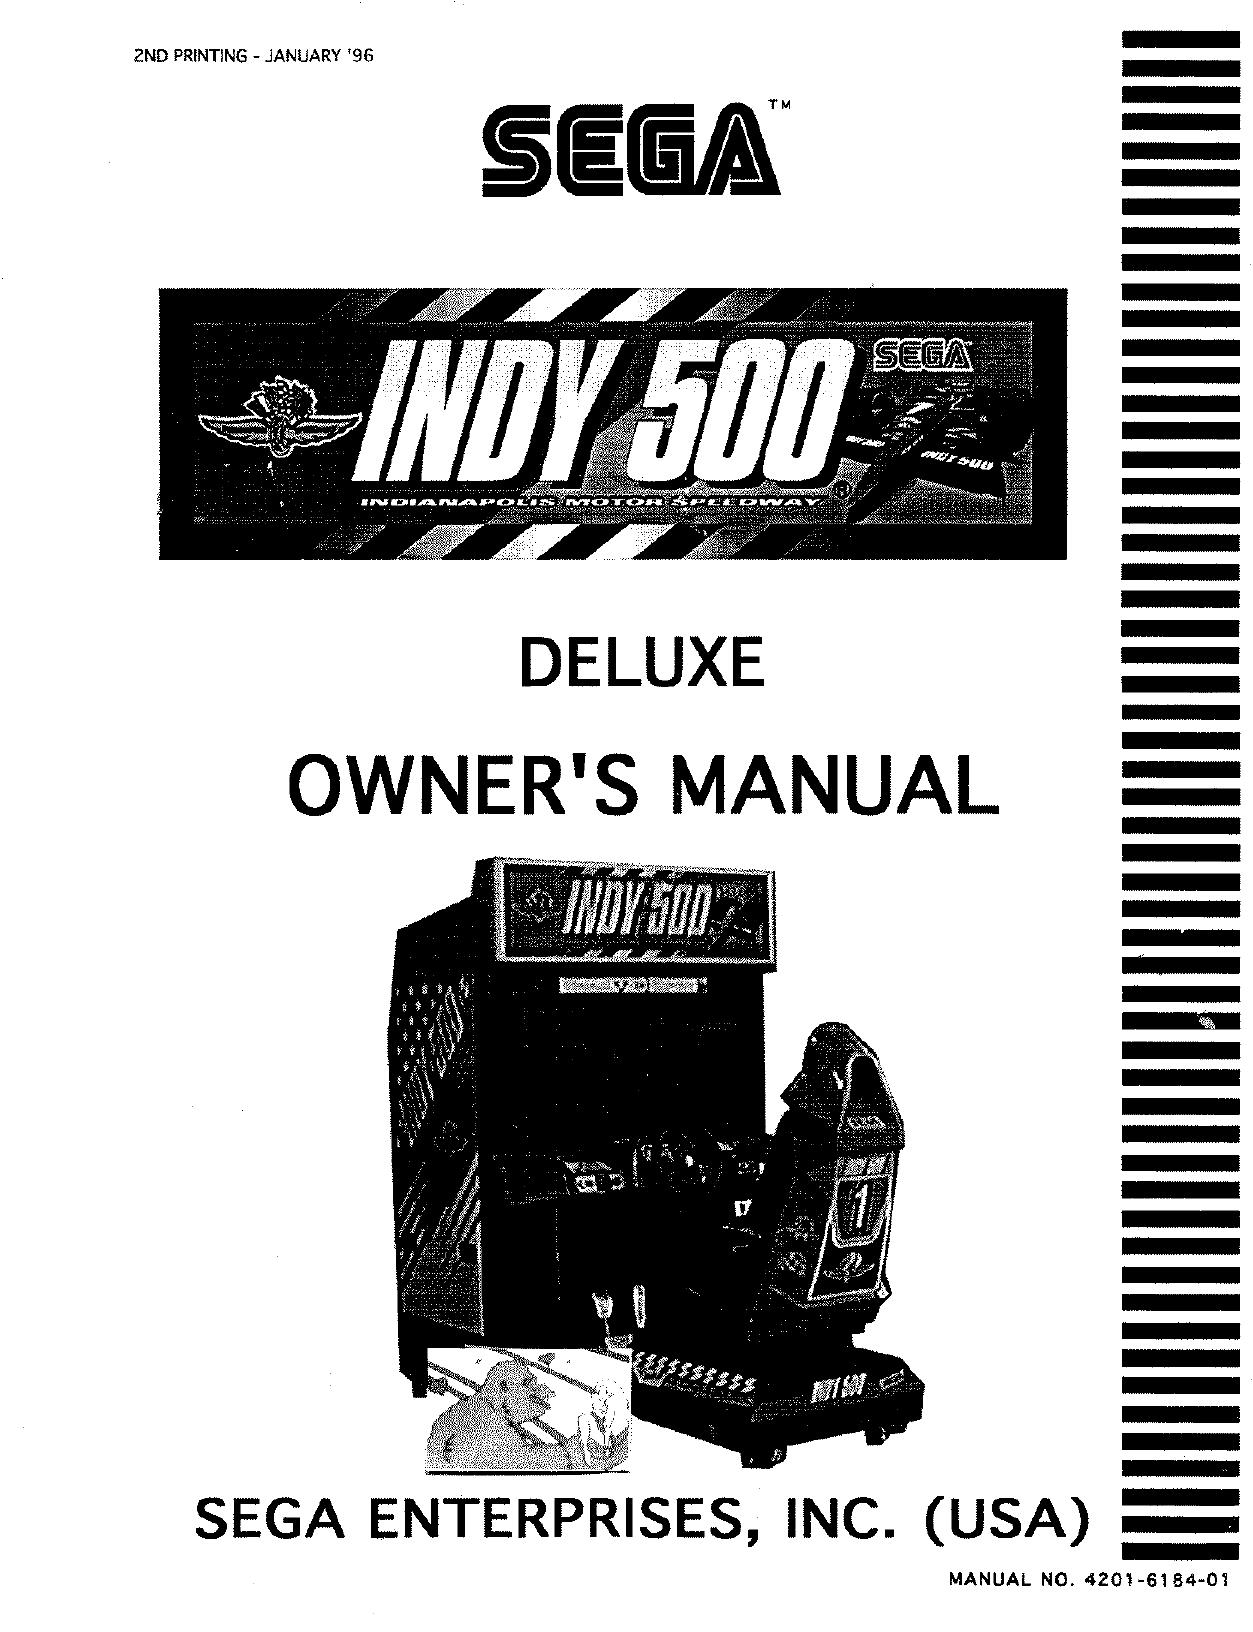 Indy 500.man